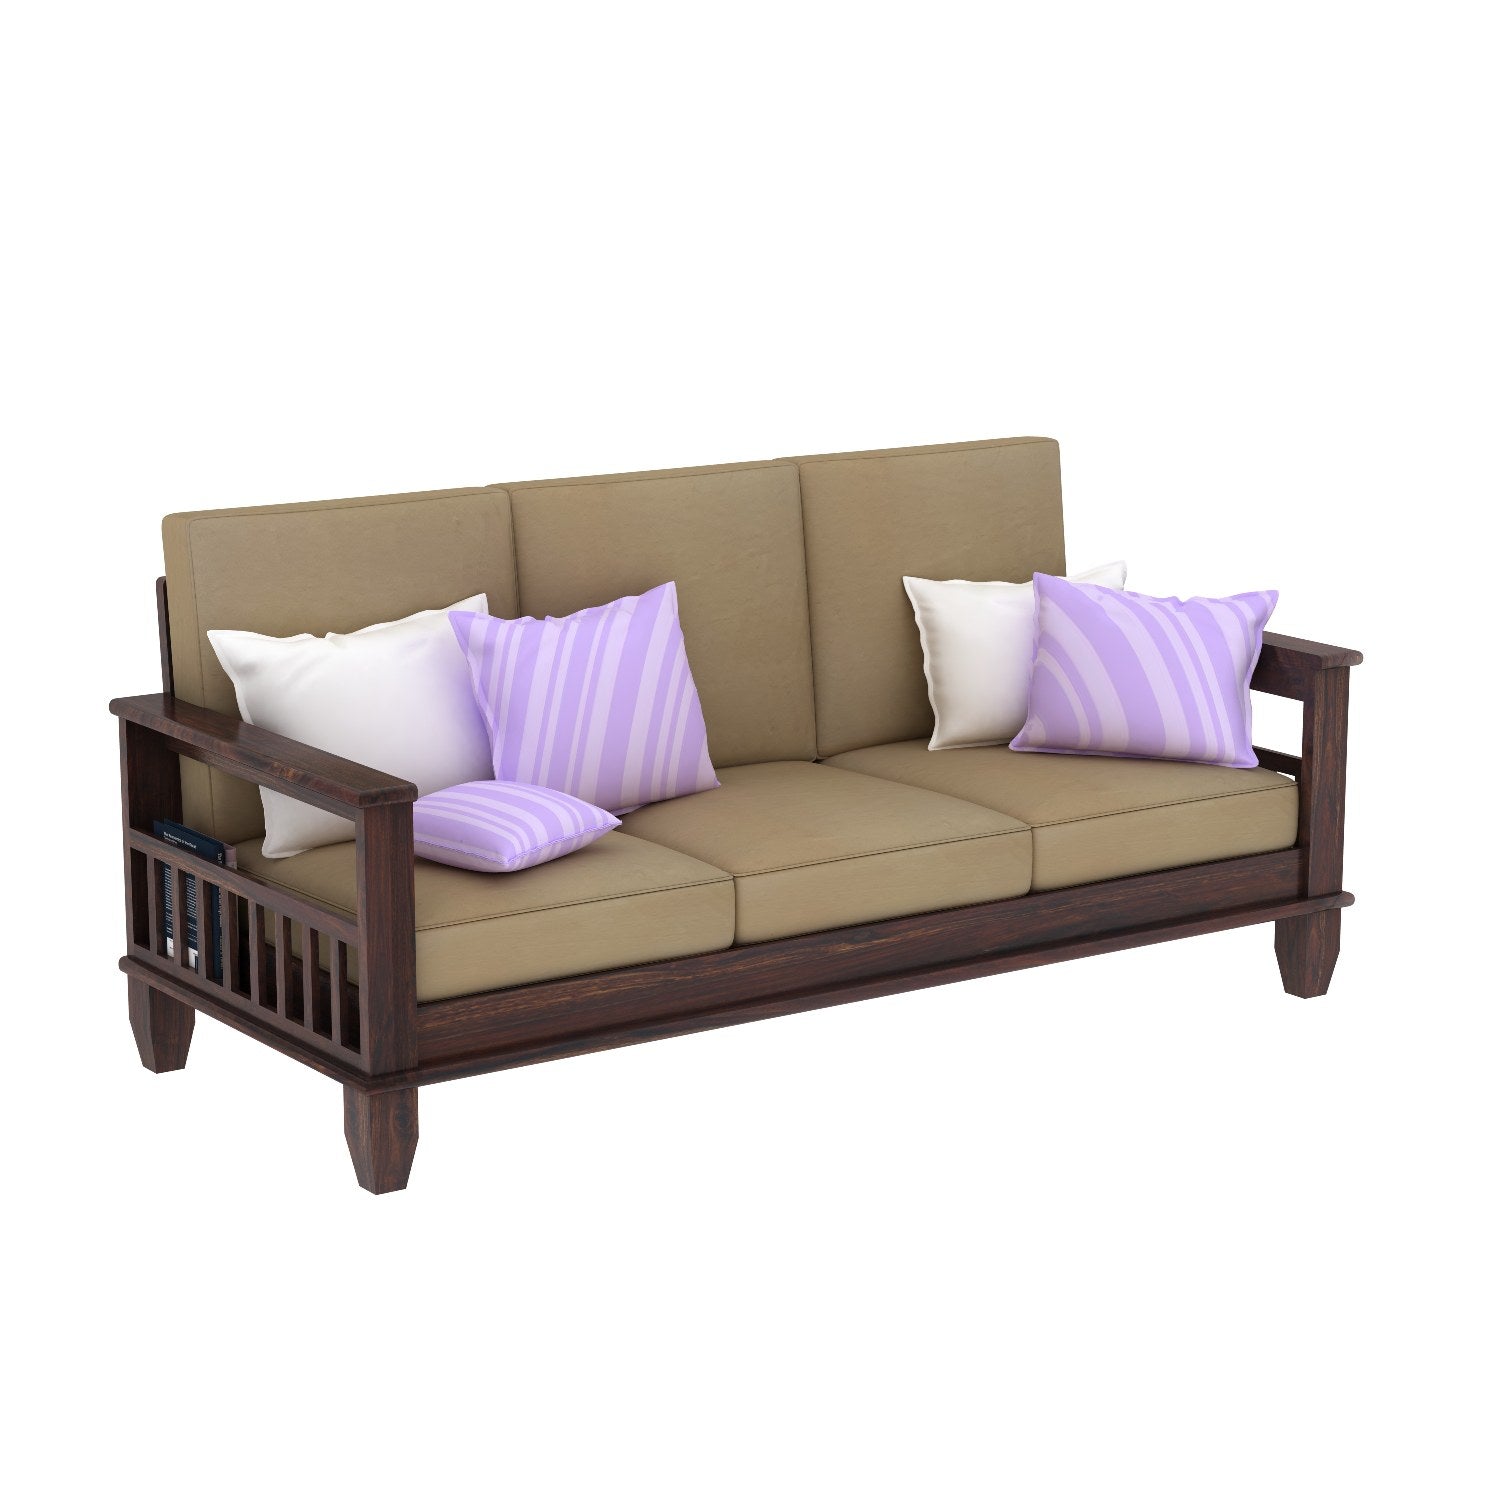 Trinity Solid Sheesham Wood 5 Seater Sofa Set (3+1+1, Walnut Finish)